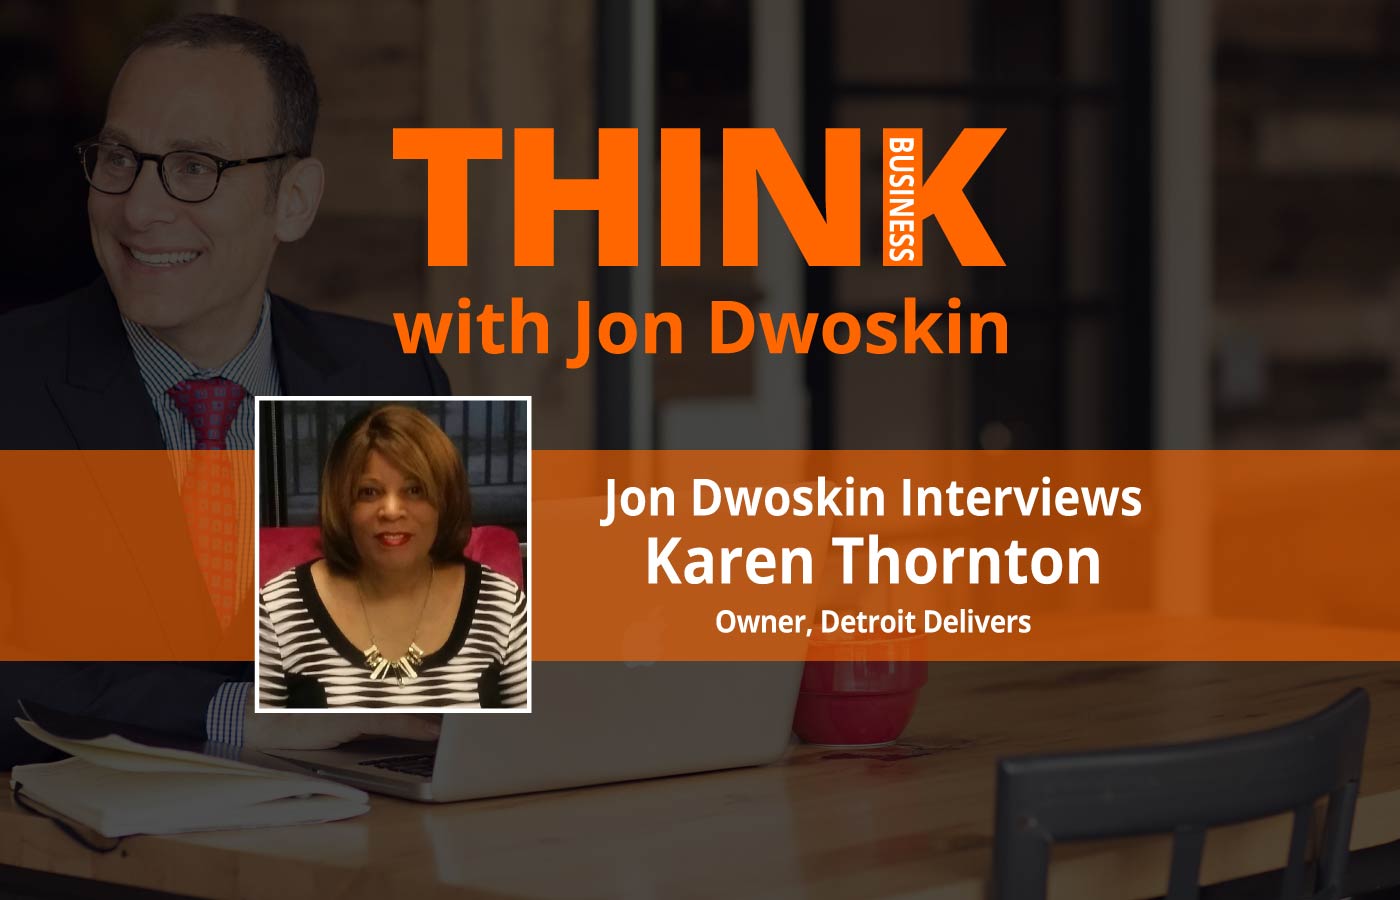 THINK Business Podcast: Jon Dwoskin Interviews Karen Thornton, Owner of Detroit Delivers